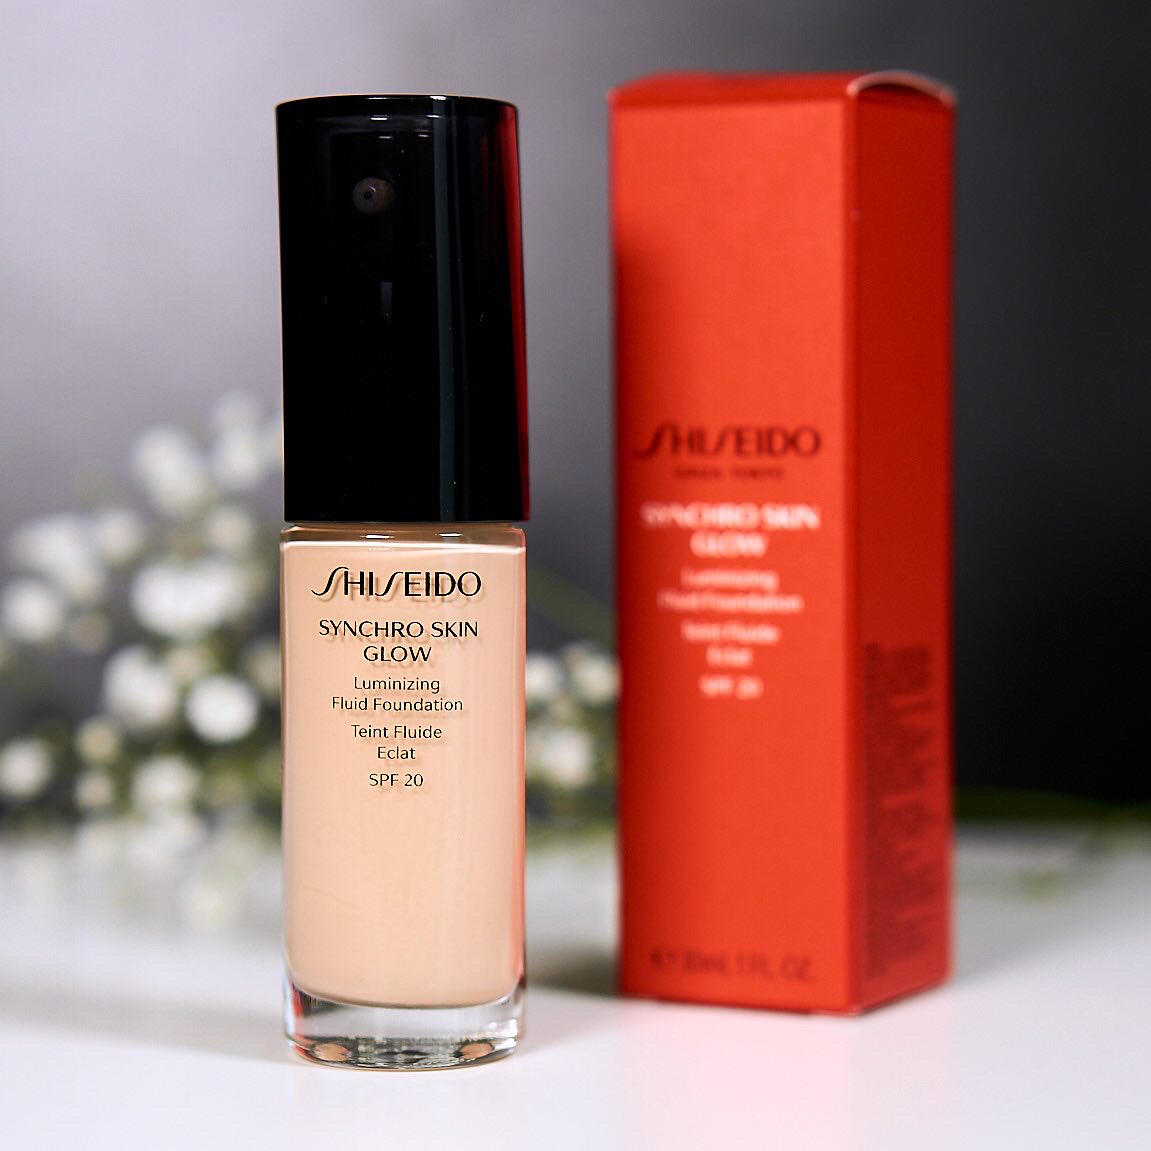 Shiseido Synchro Skin Glow - Luminizing Fluid Foundation